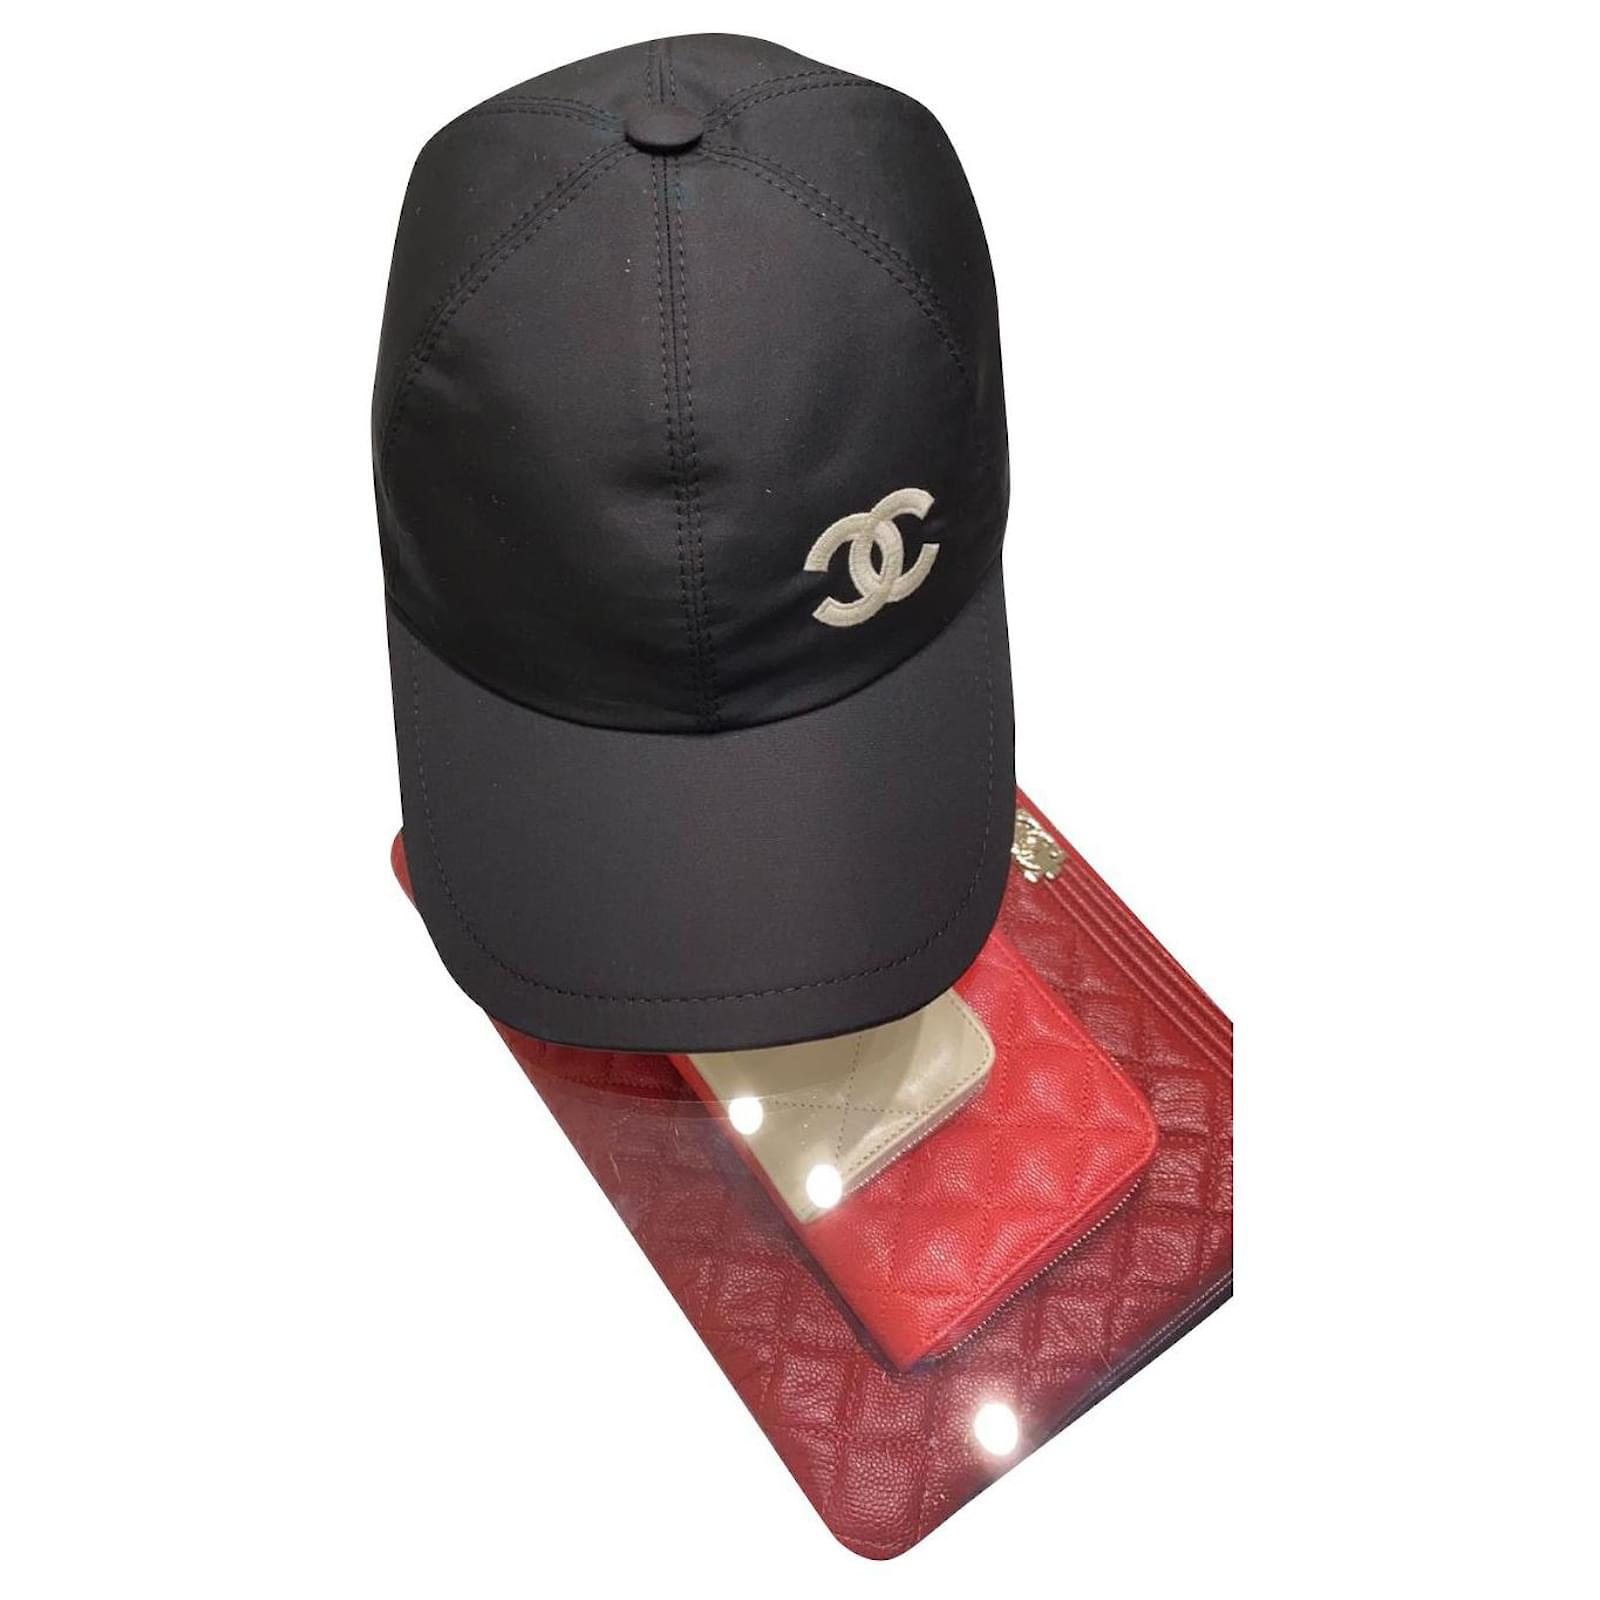 Chanel hat